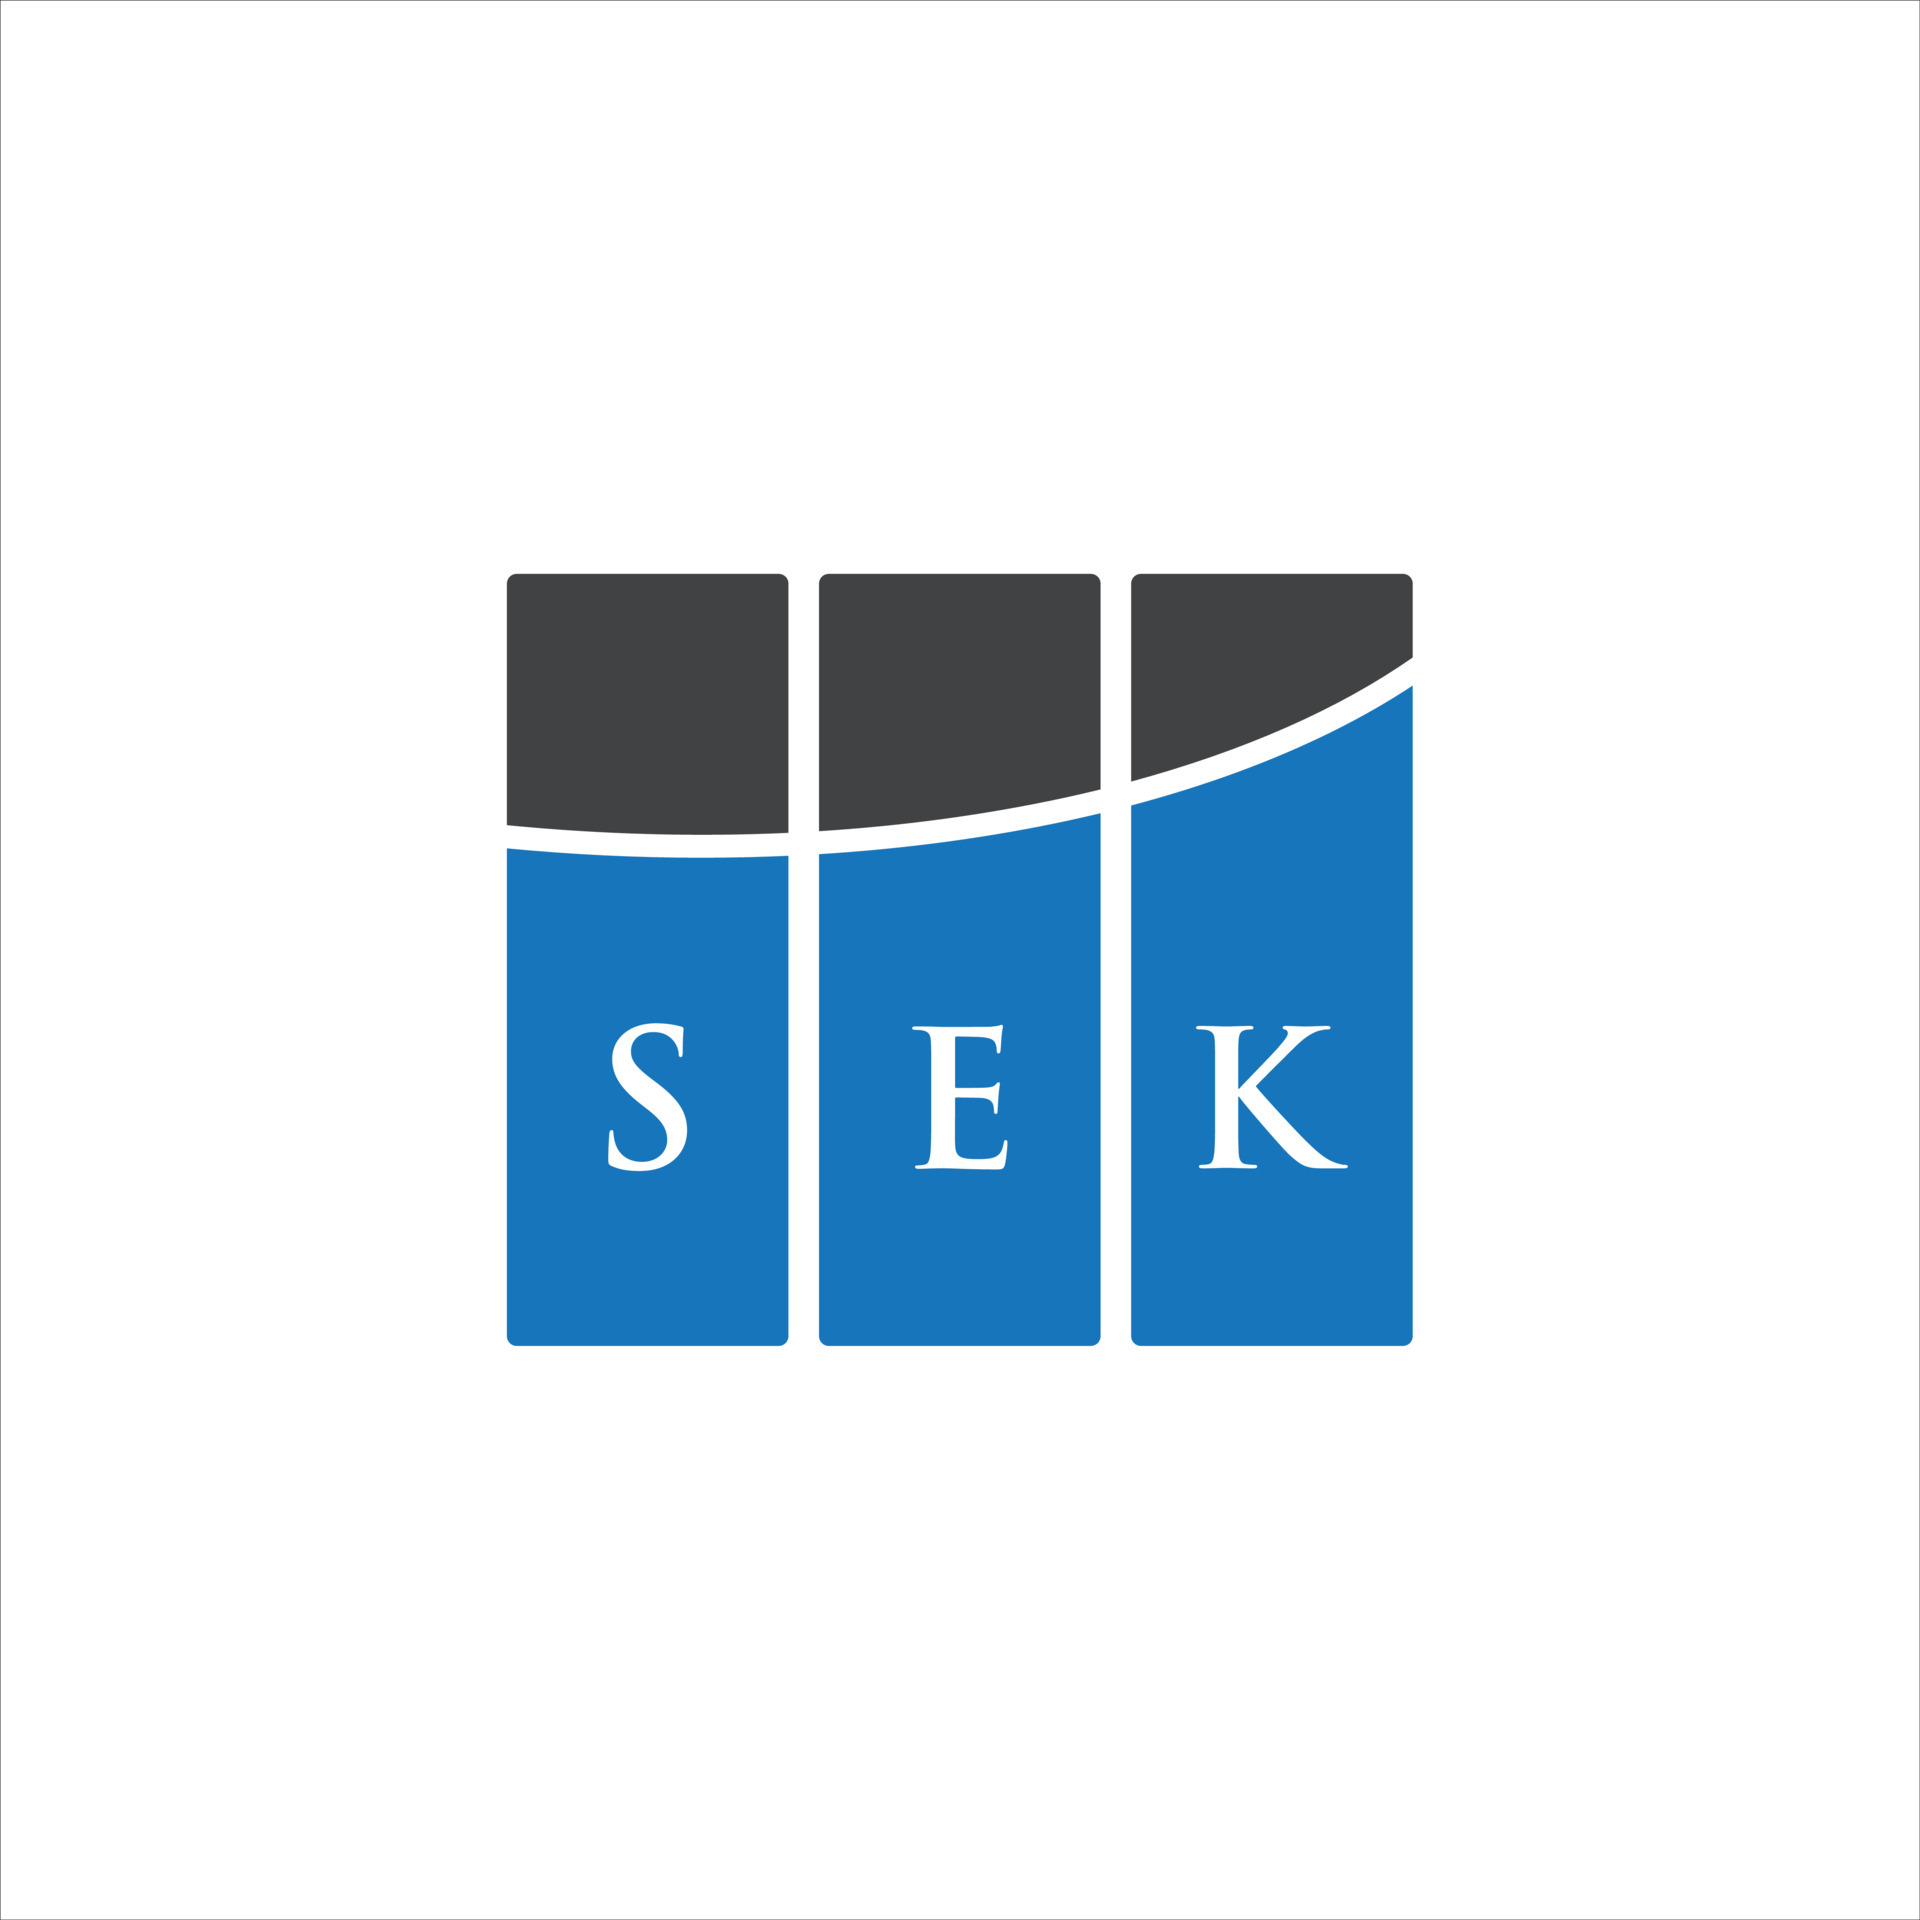 Sek logo